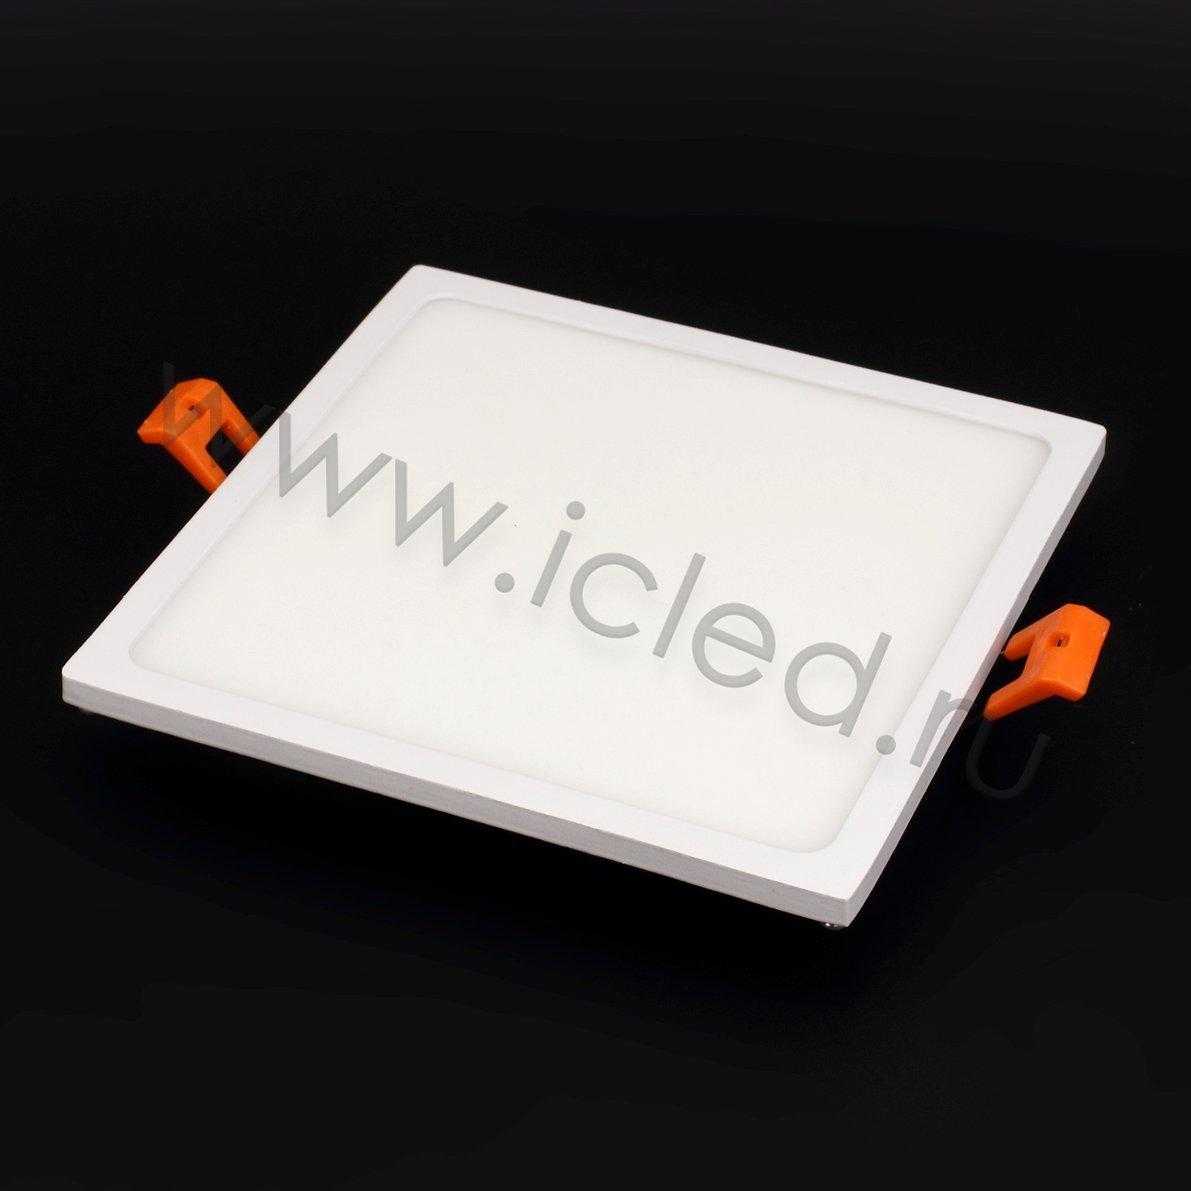 Светодиодные светильники Светодиодный светильник MBD-101 MB16 (16W, square, warm white)